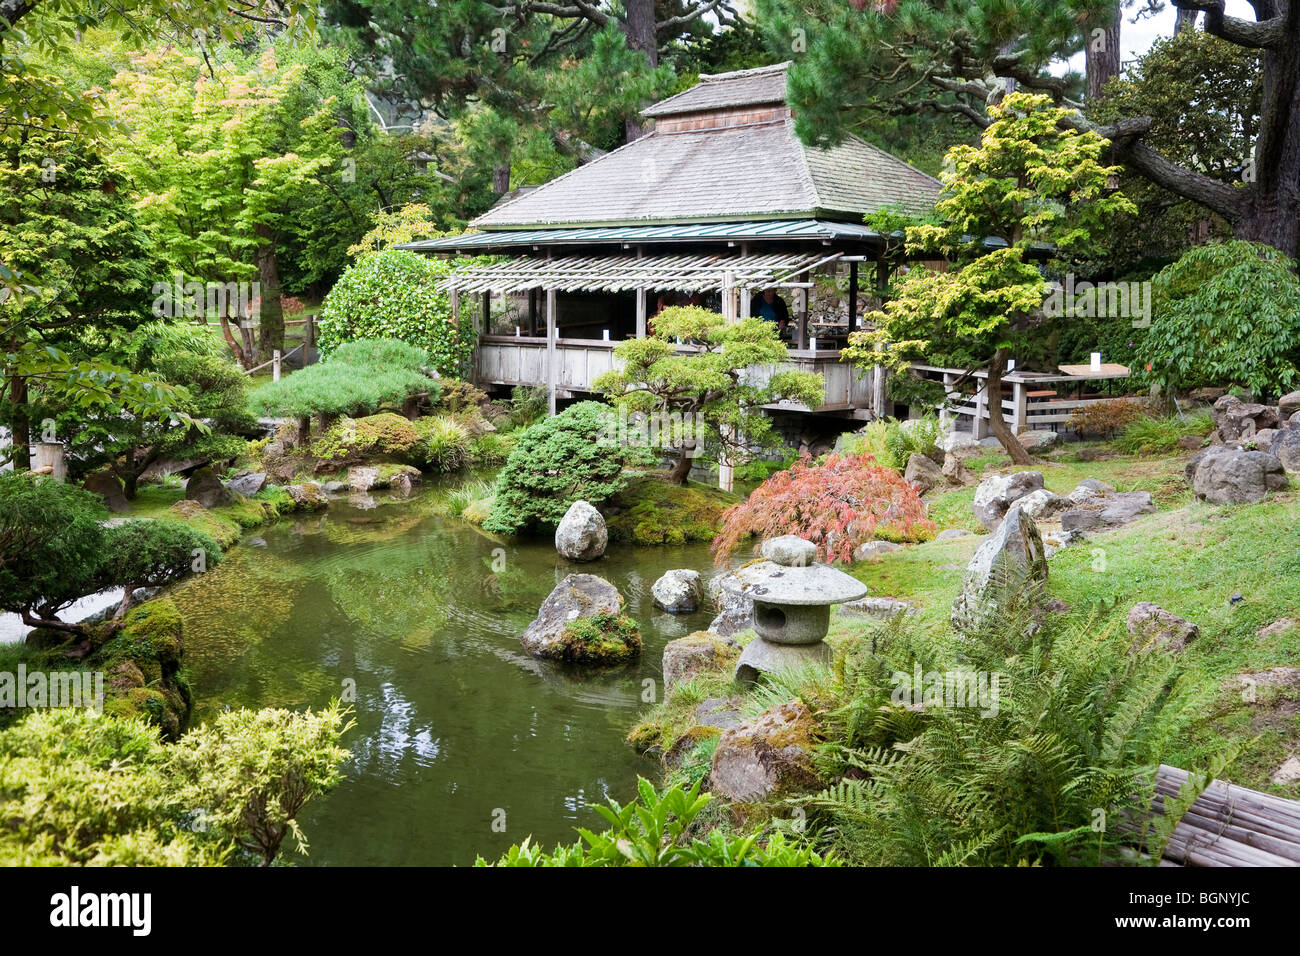 Golden Gate Park Japanese Tea Garden